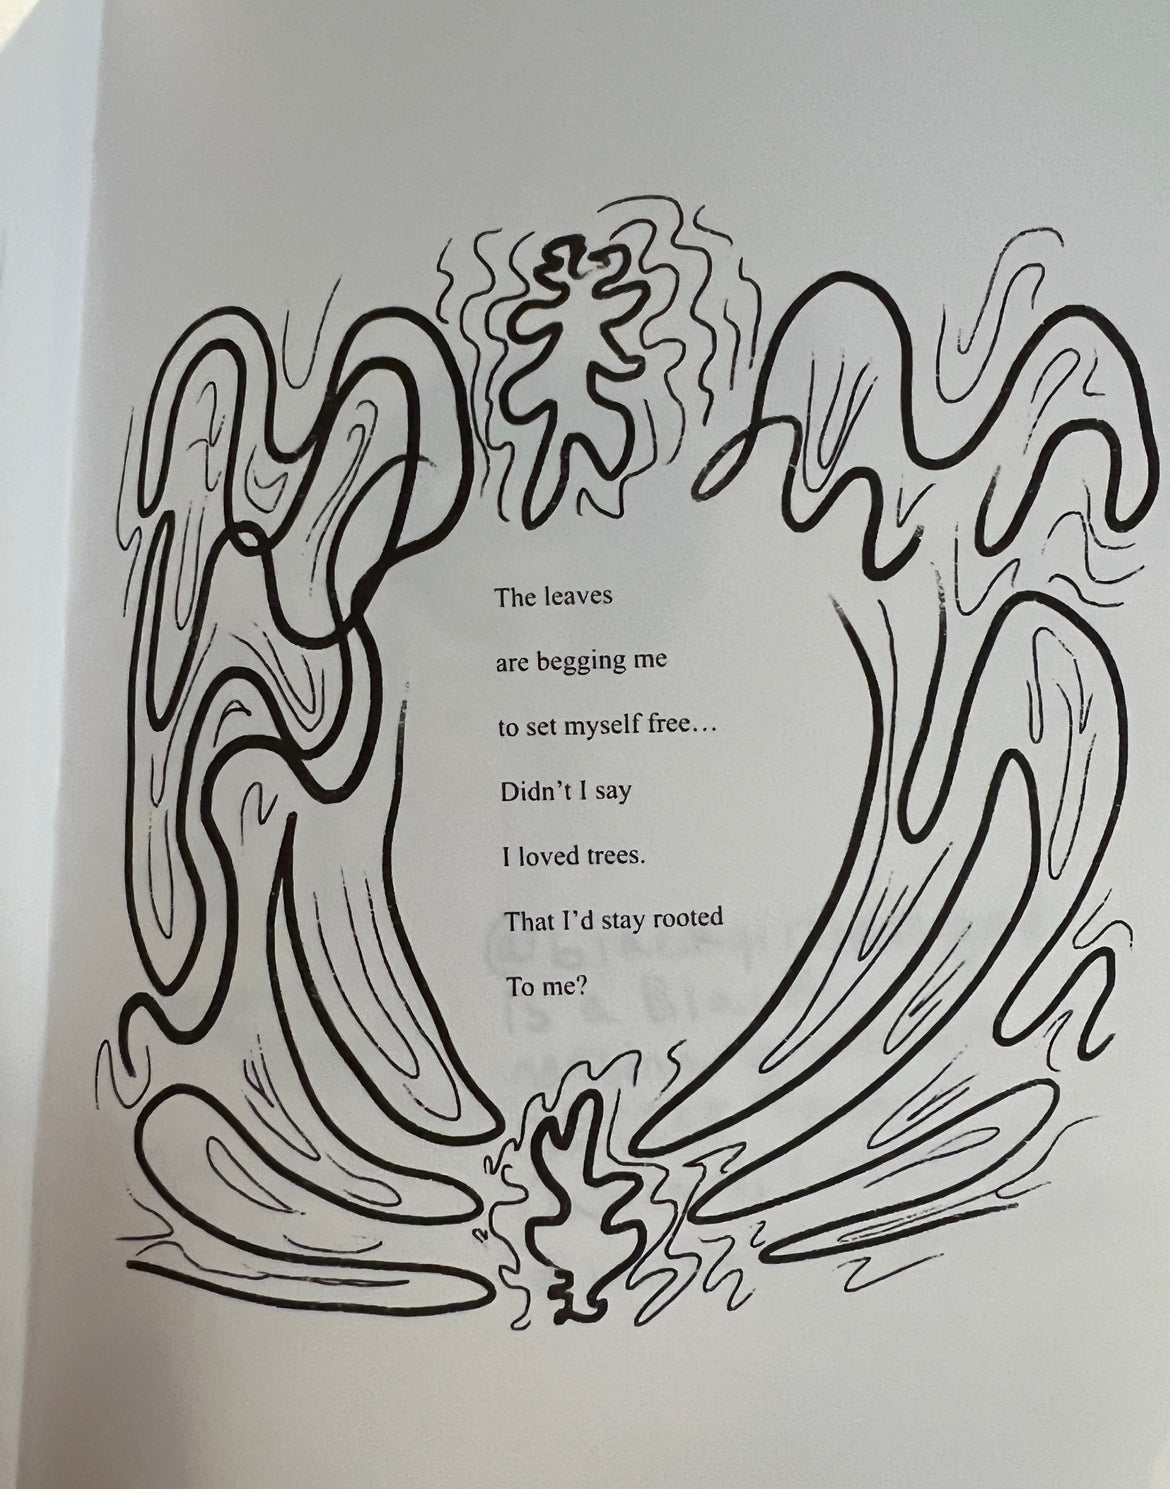 poems about the body (zine) by blackgirlsaregod, 18+